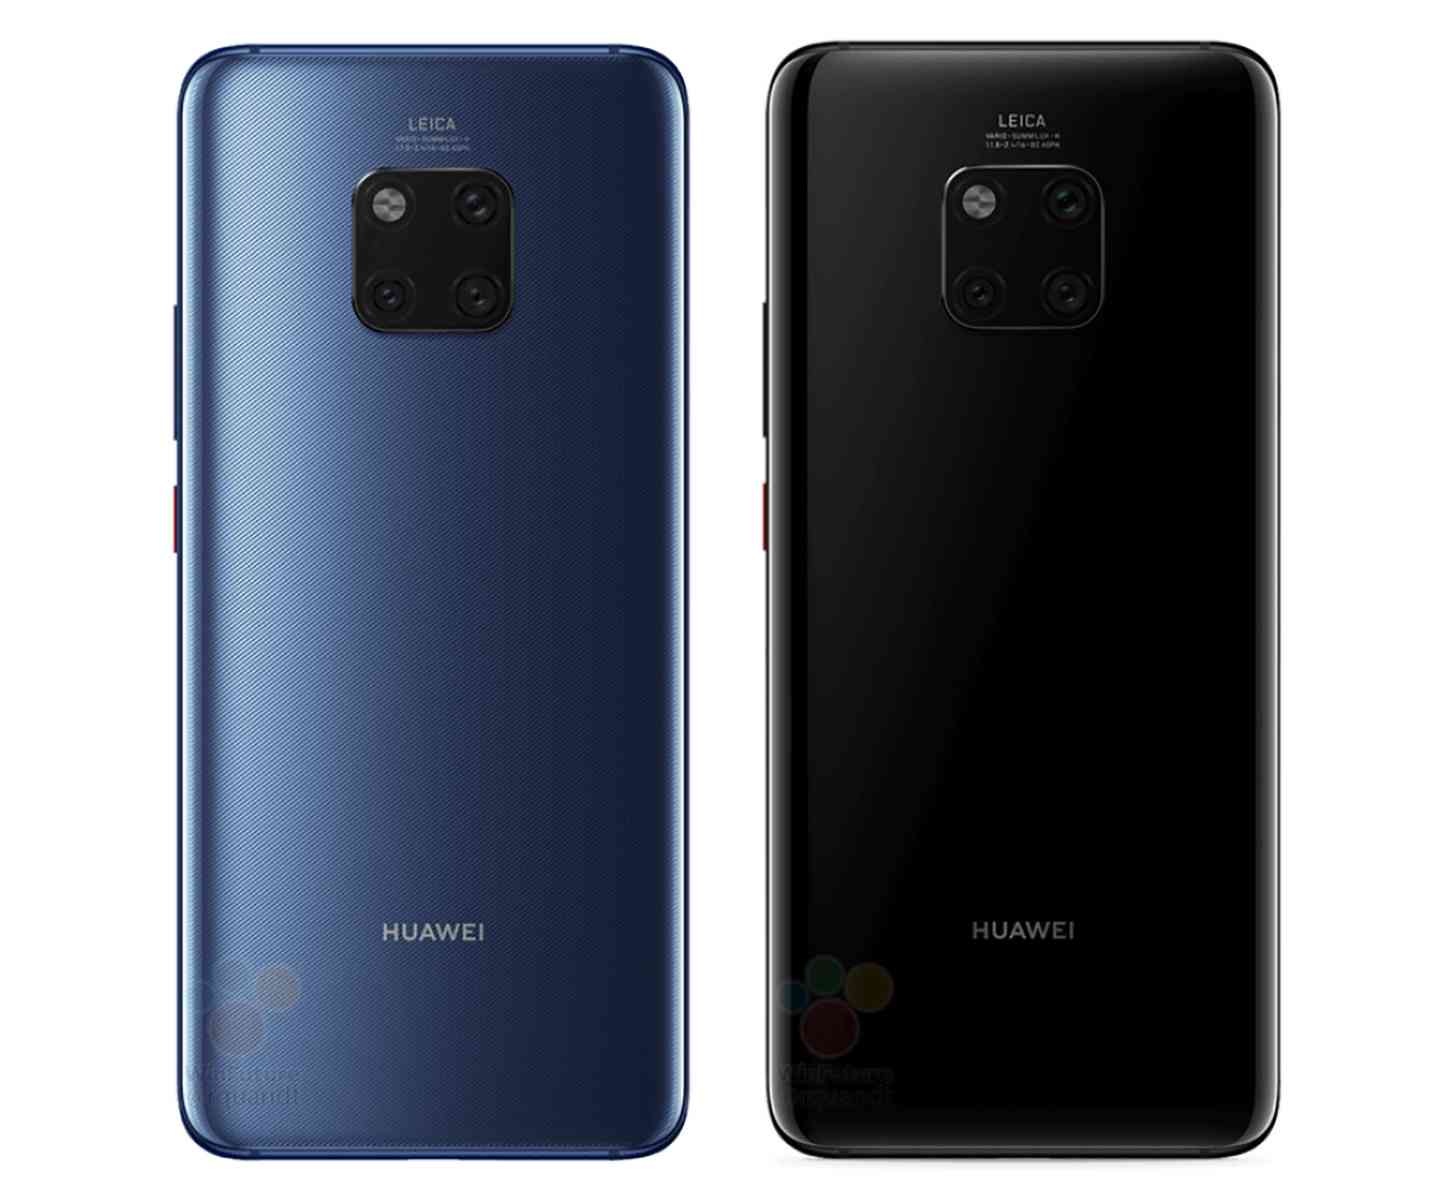 Huawei Mate 20 Pro colors leak